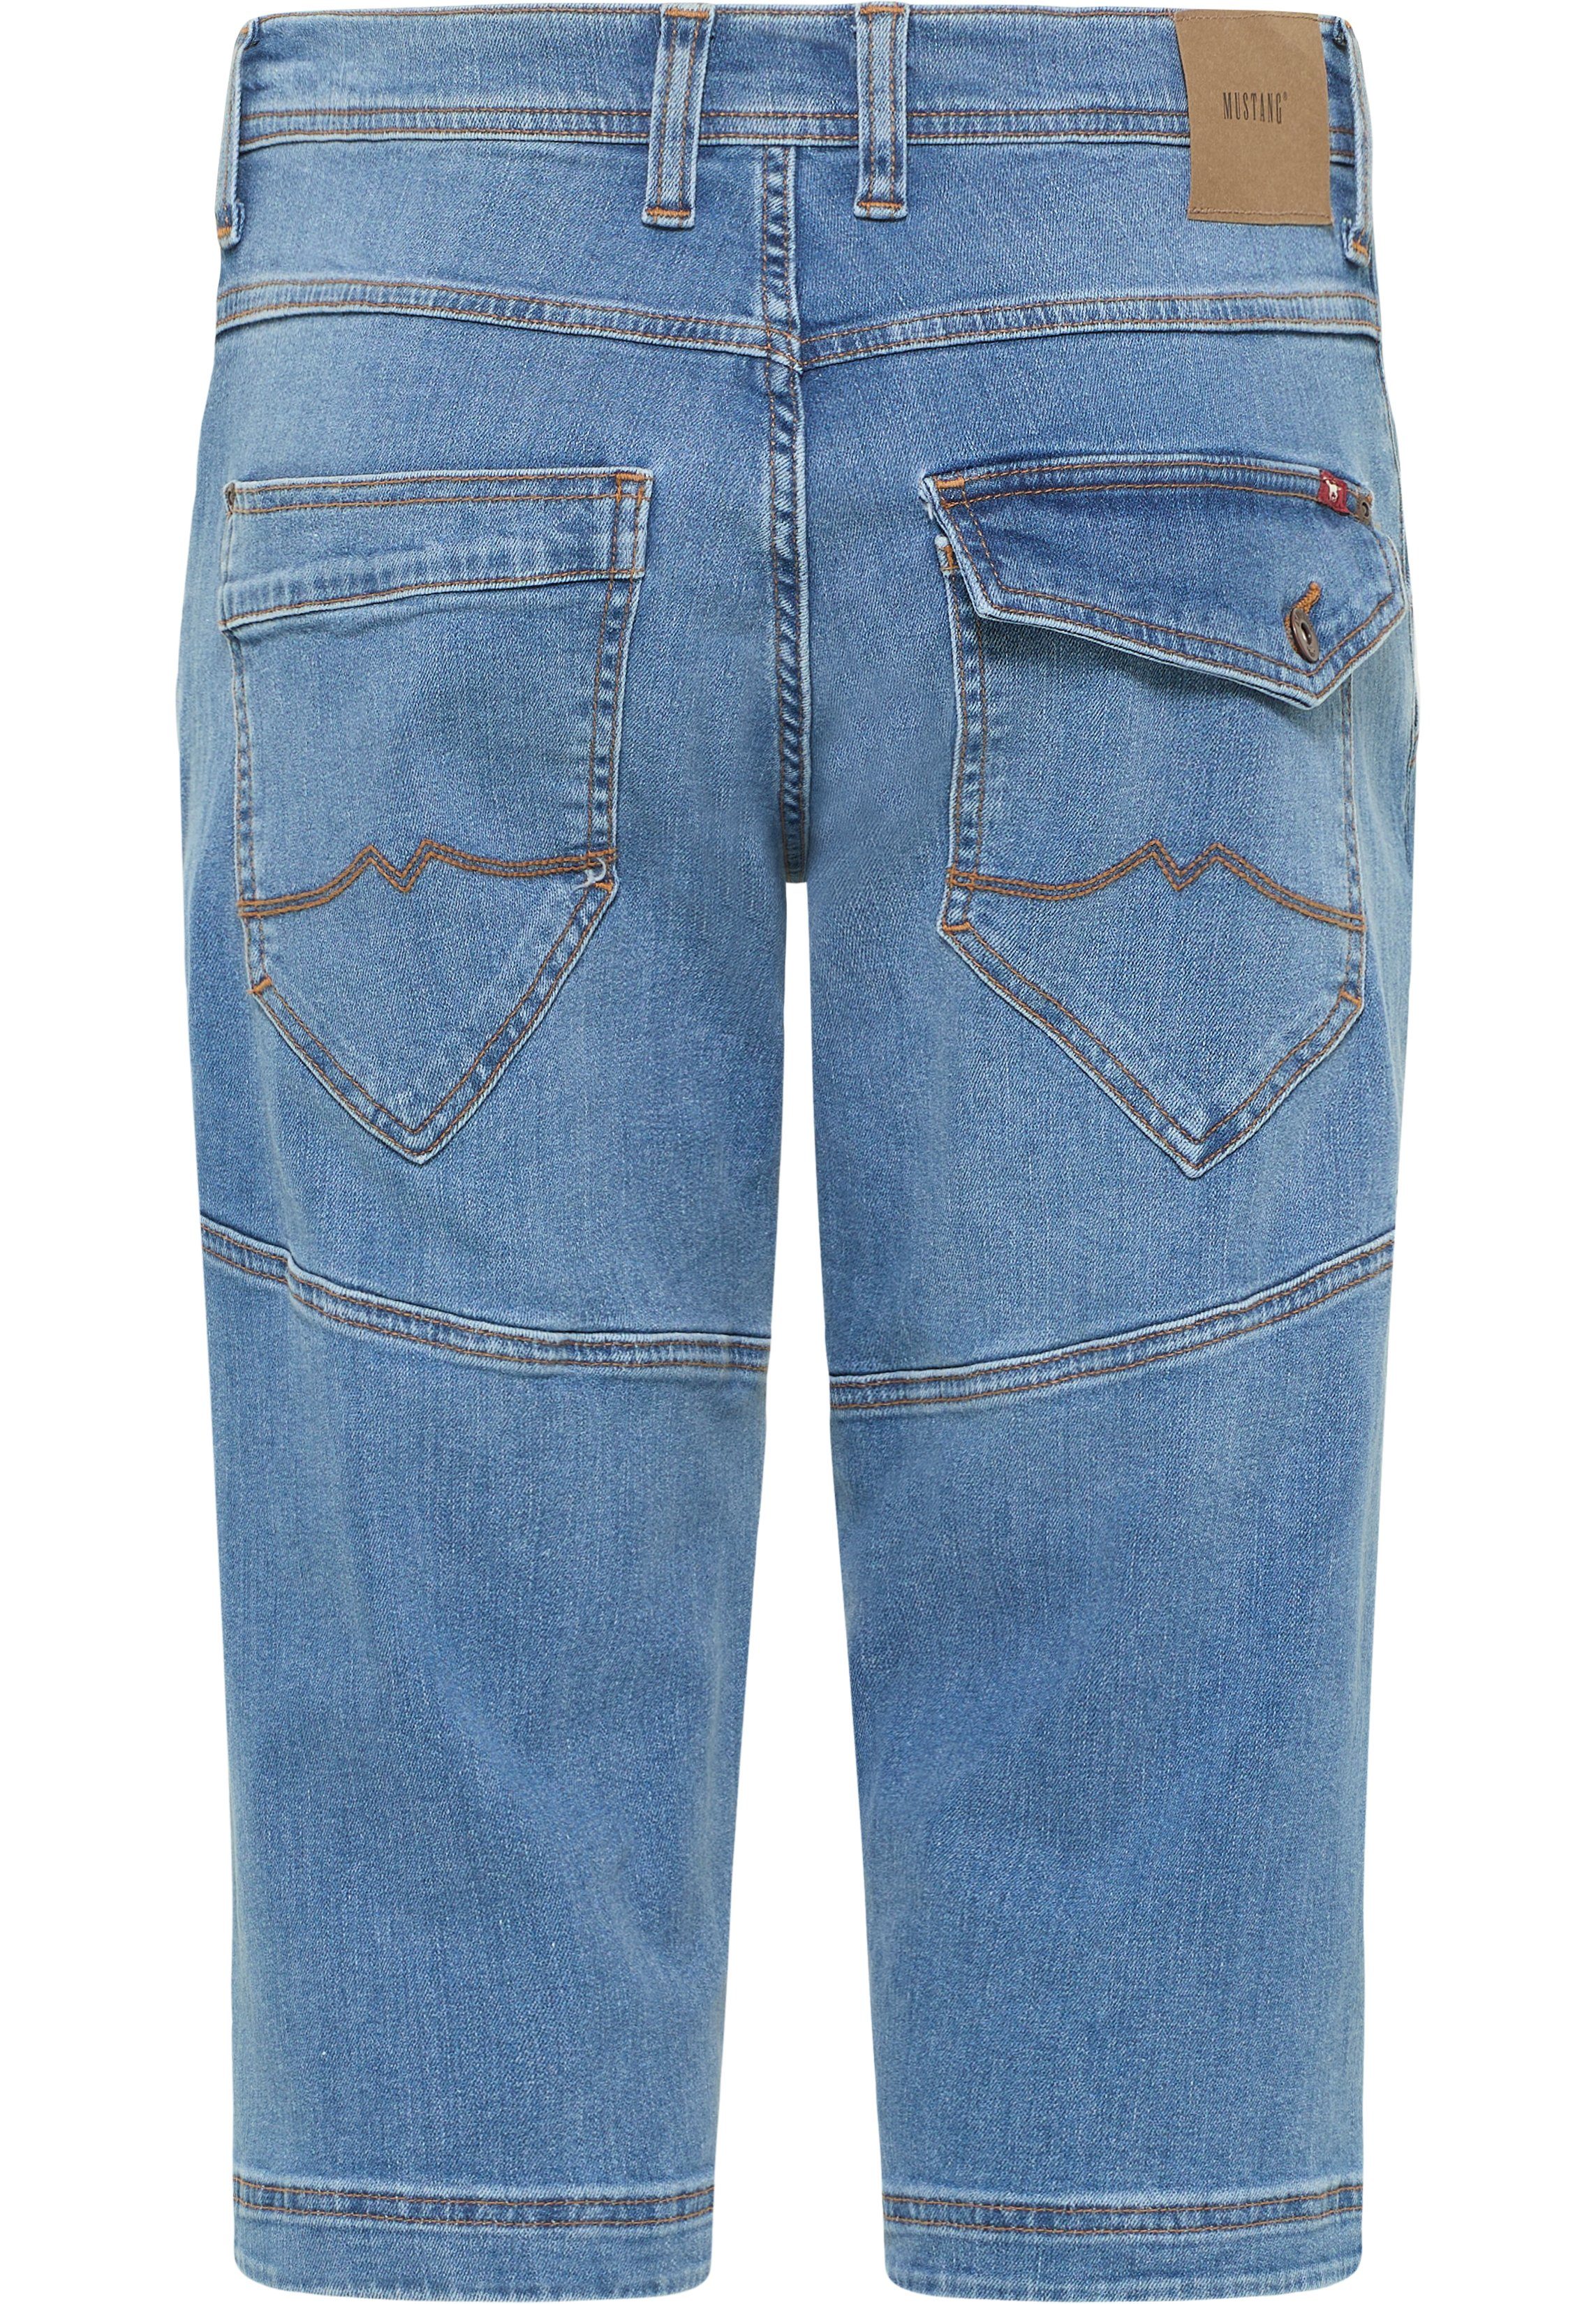 Shorts Jeansshorts Style Fremont blau-5000583 MUSTANG